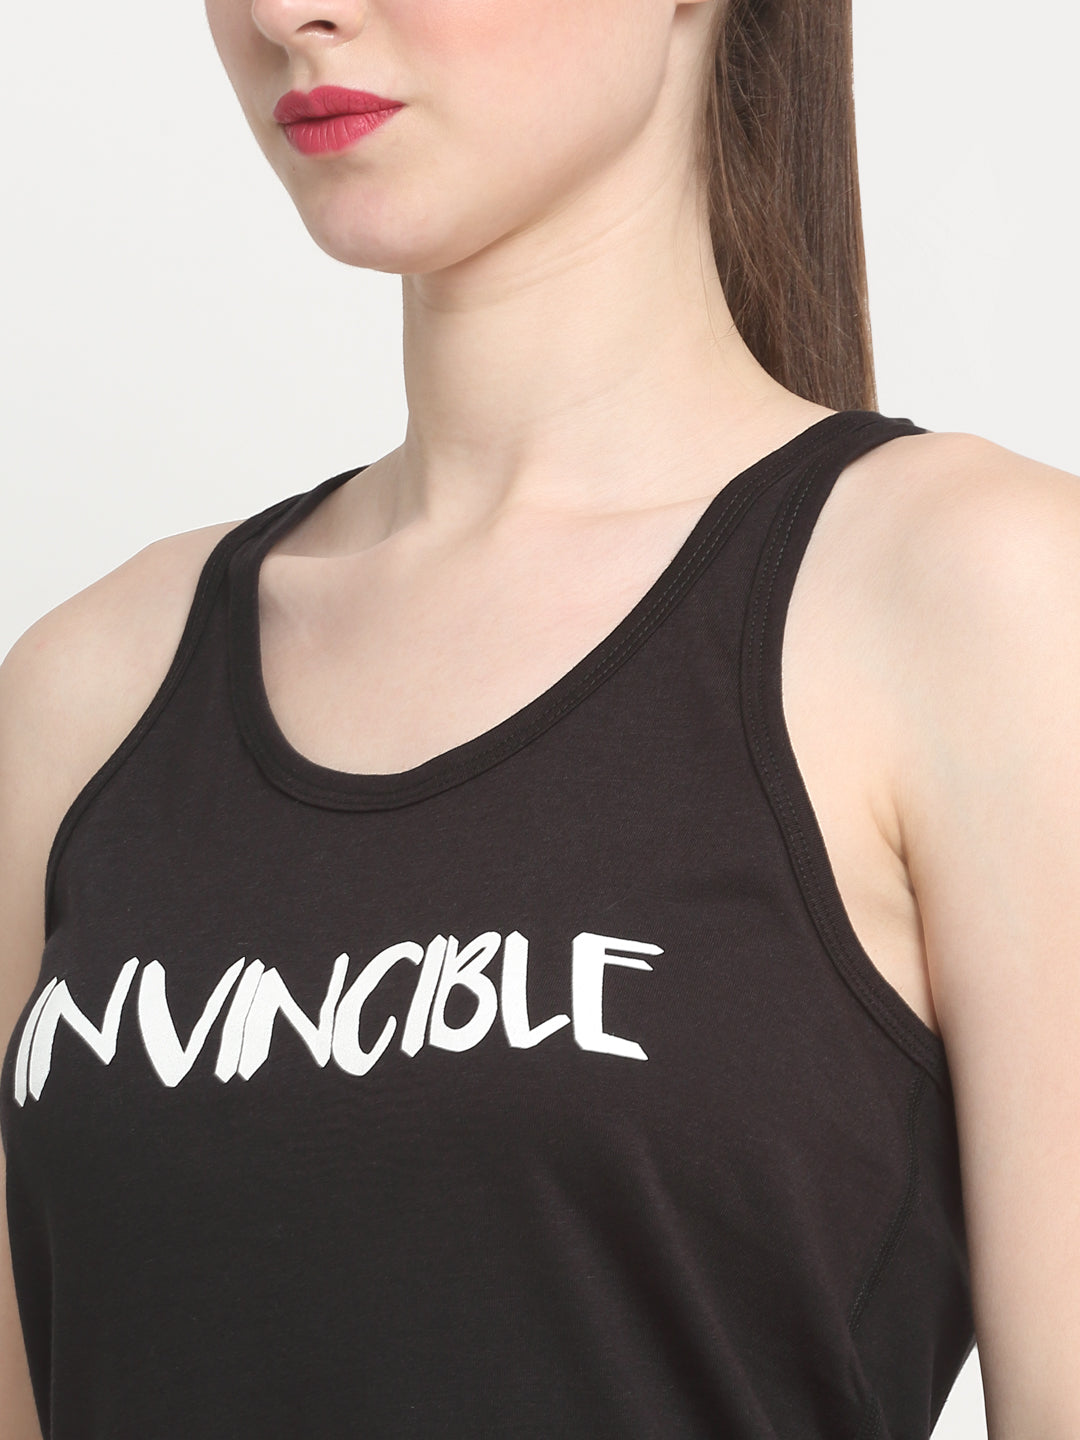 Invincible Women's Workout Tank Top